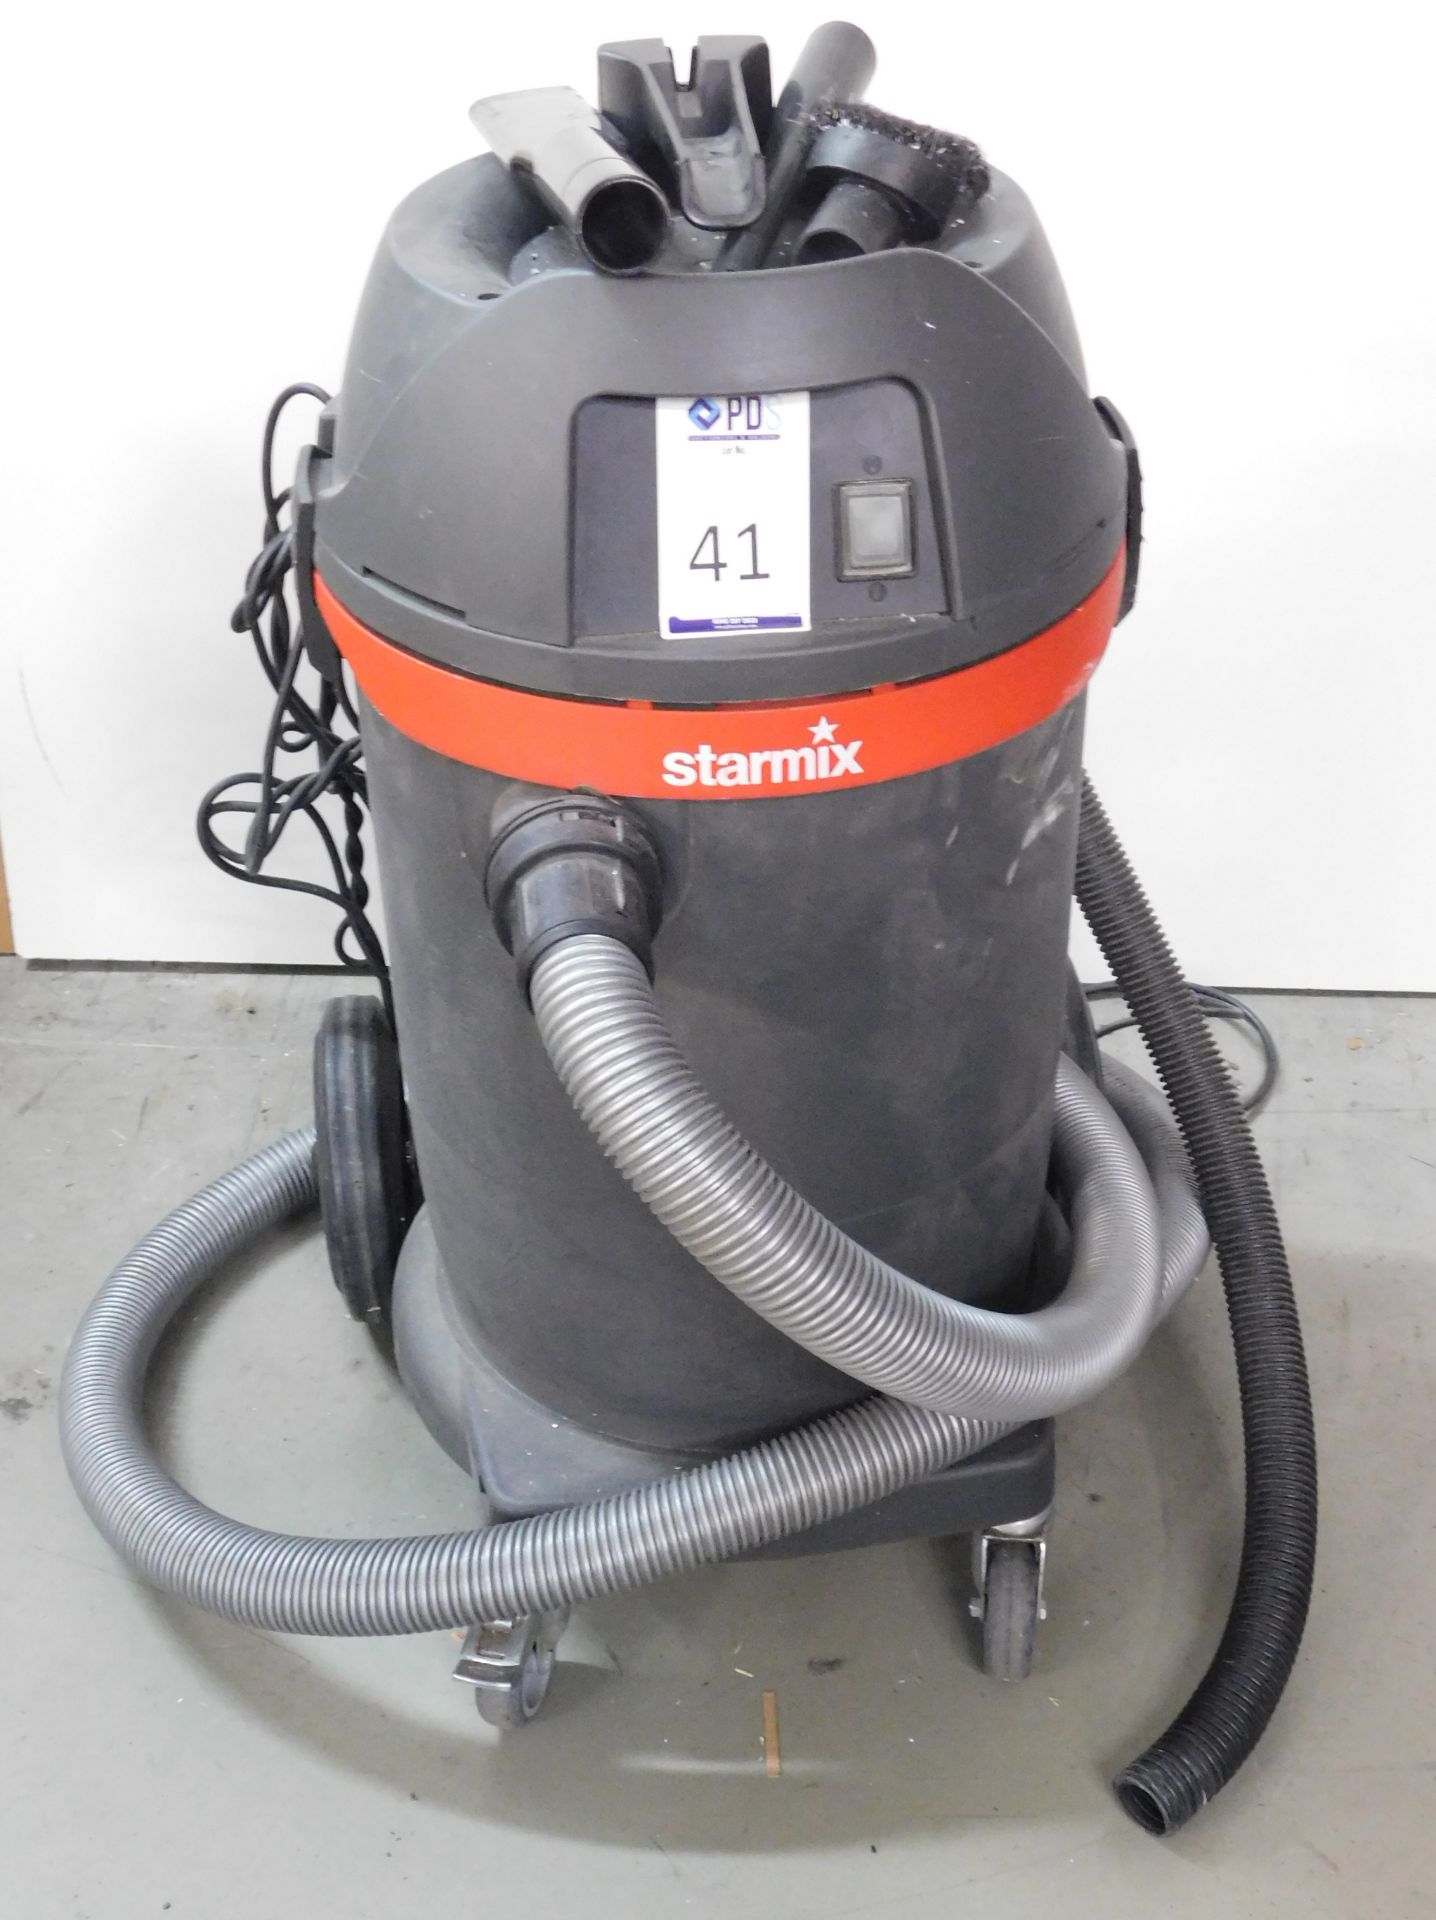 Electrostar “Starmix” L124 Cylinder Vacuum, Serial Number 05/15/230427 (Location: Tonbridge, Kent.